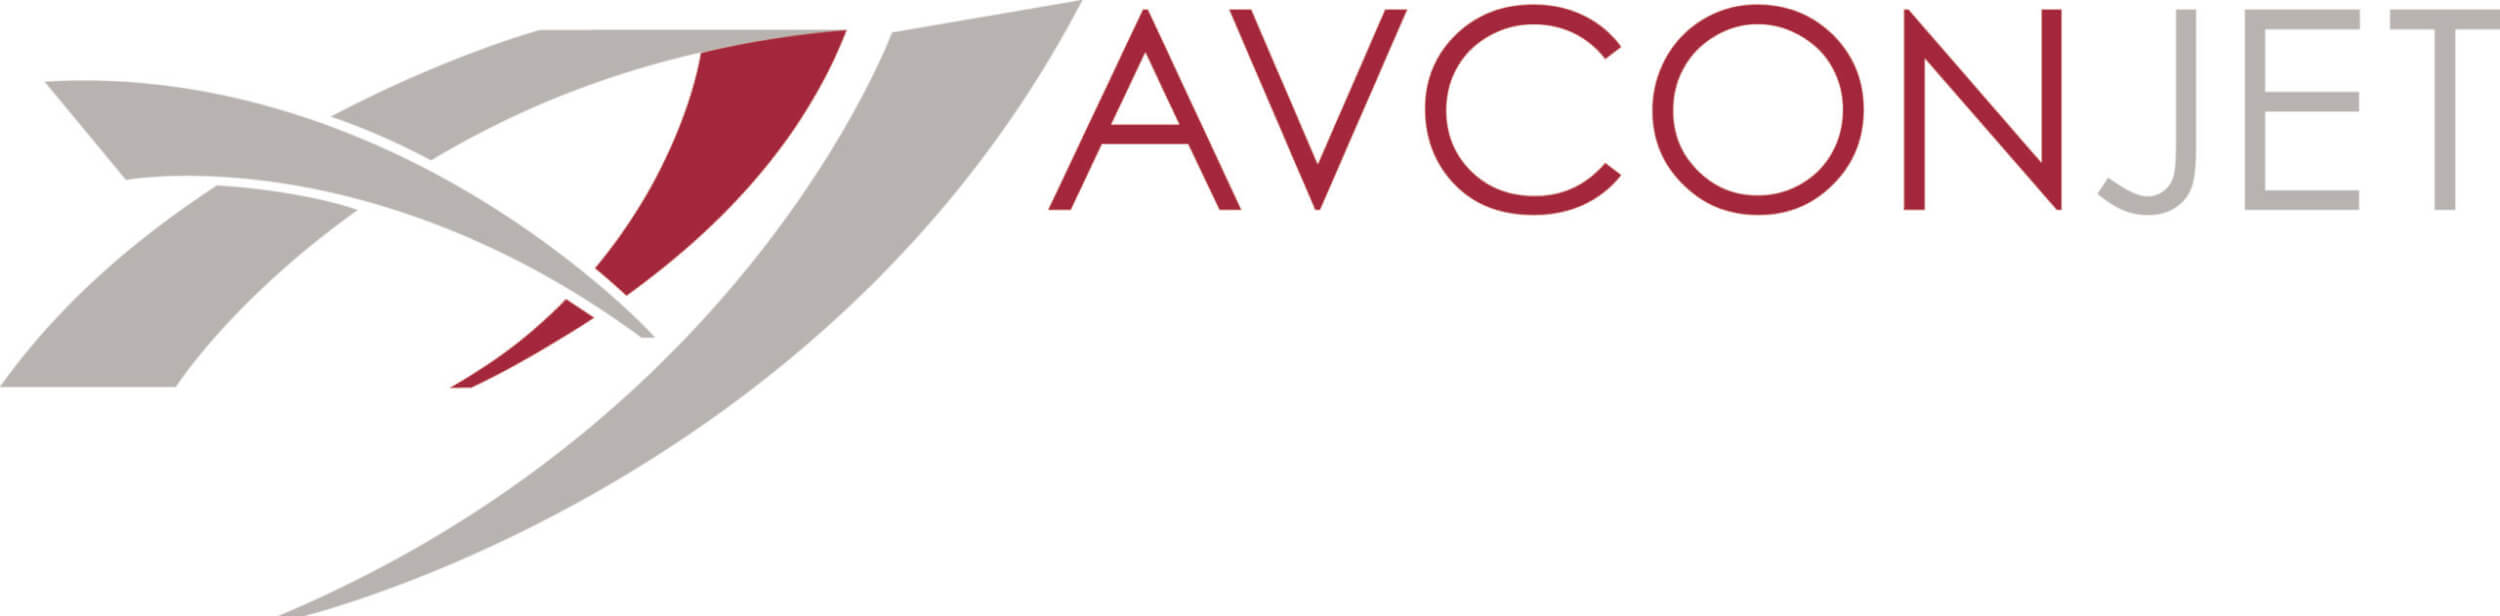 Avcon_Jet_Logo